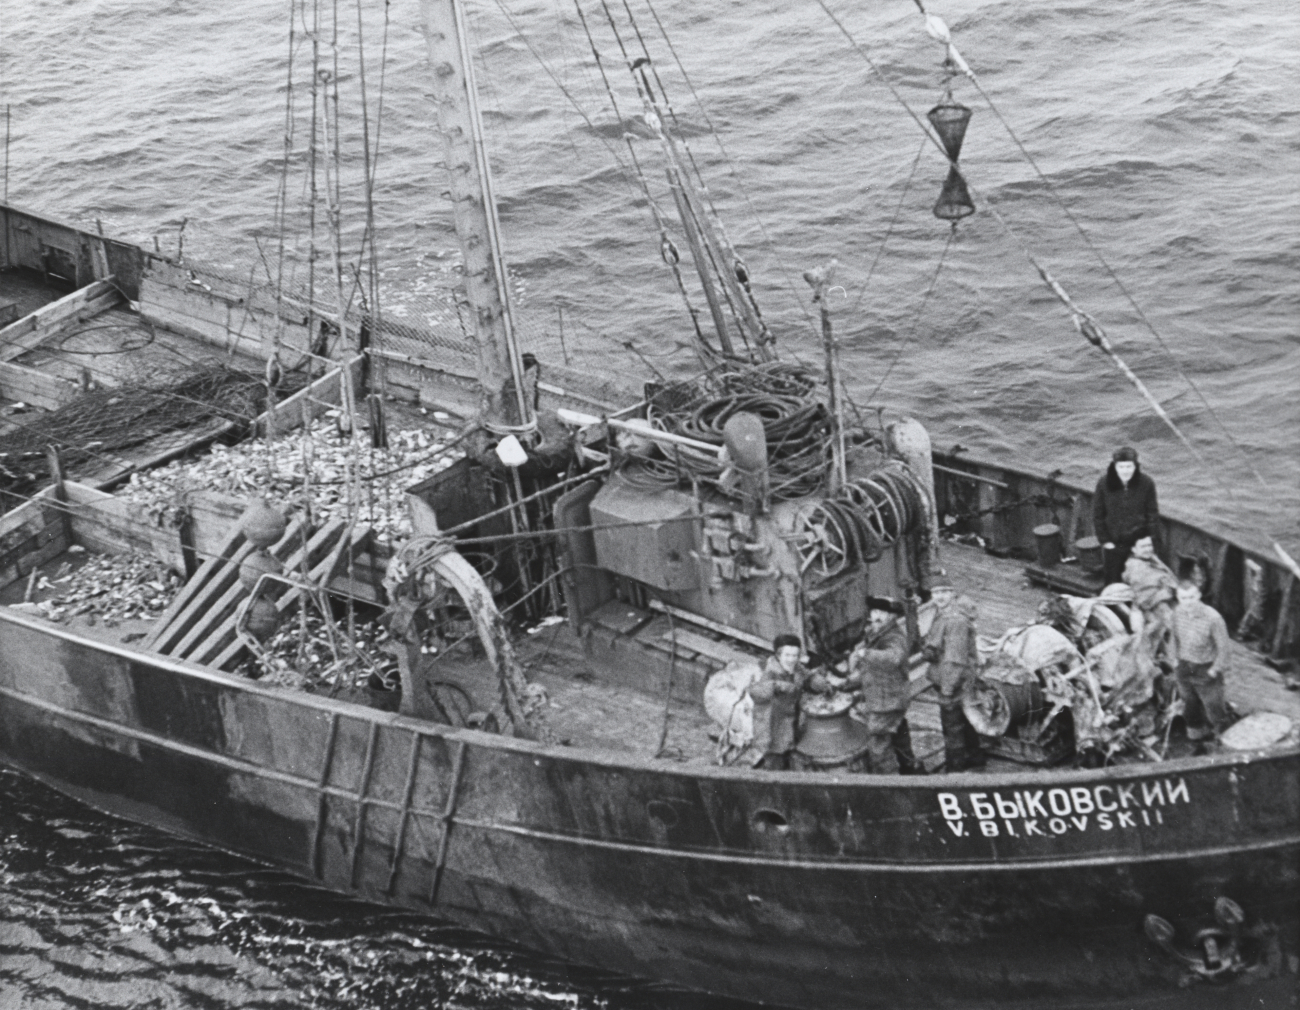 The Soviet side trawler V